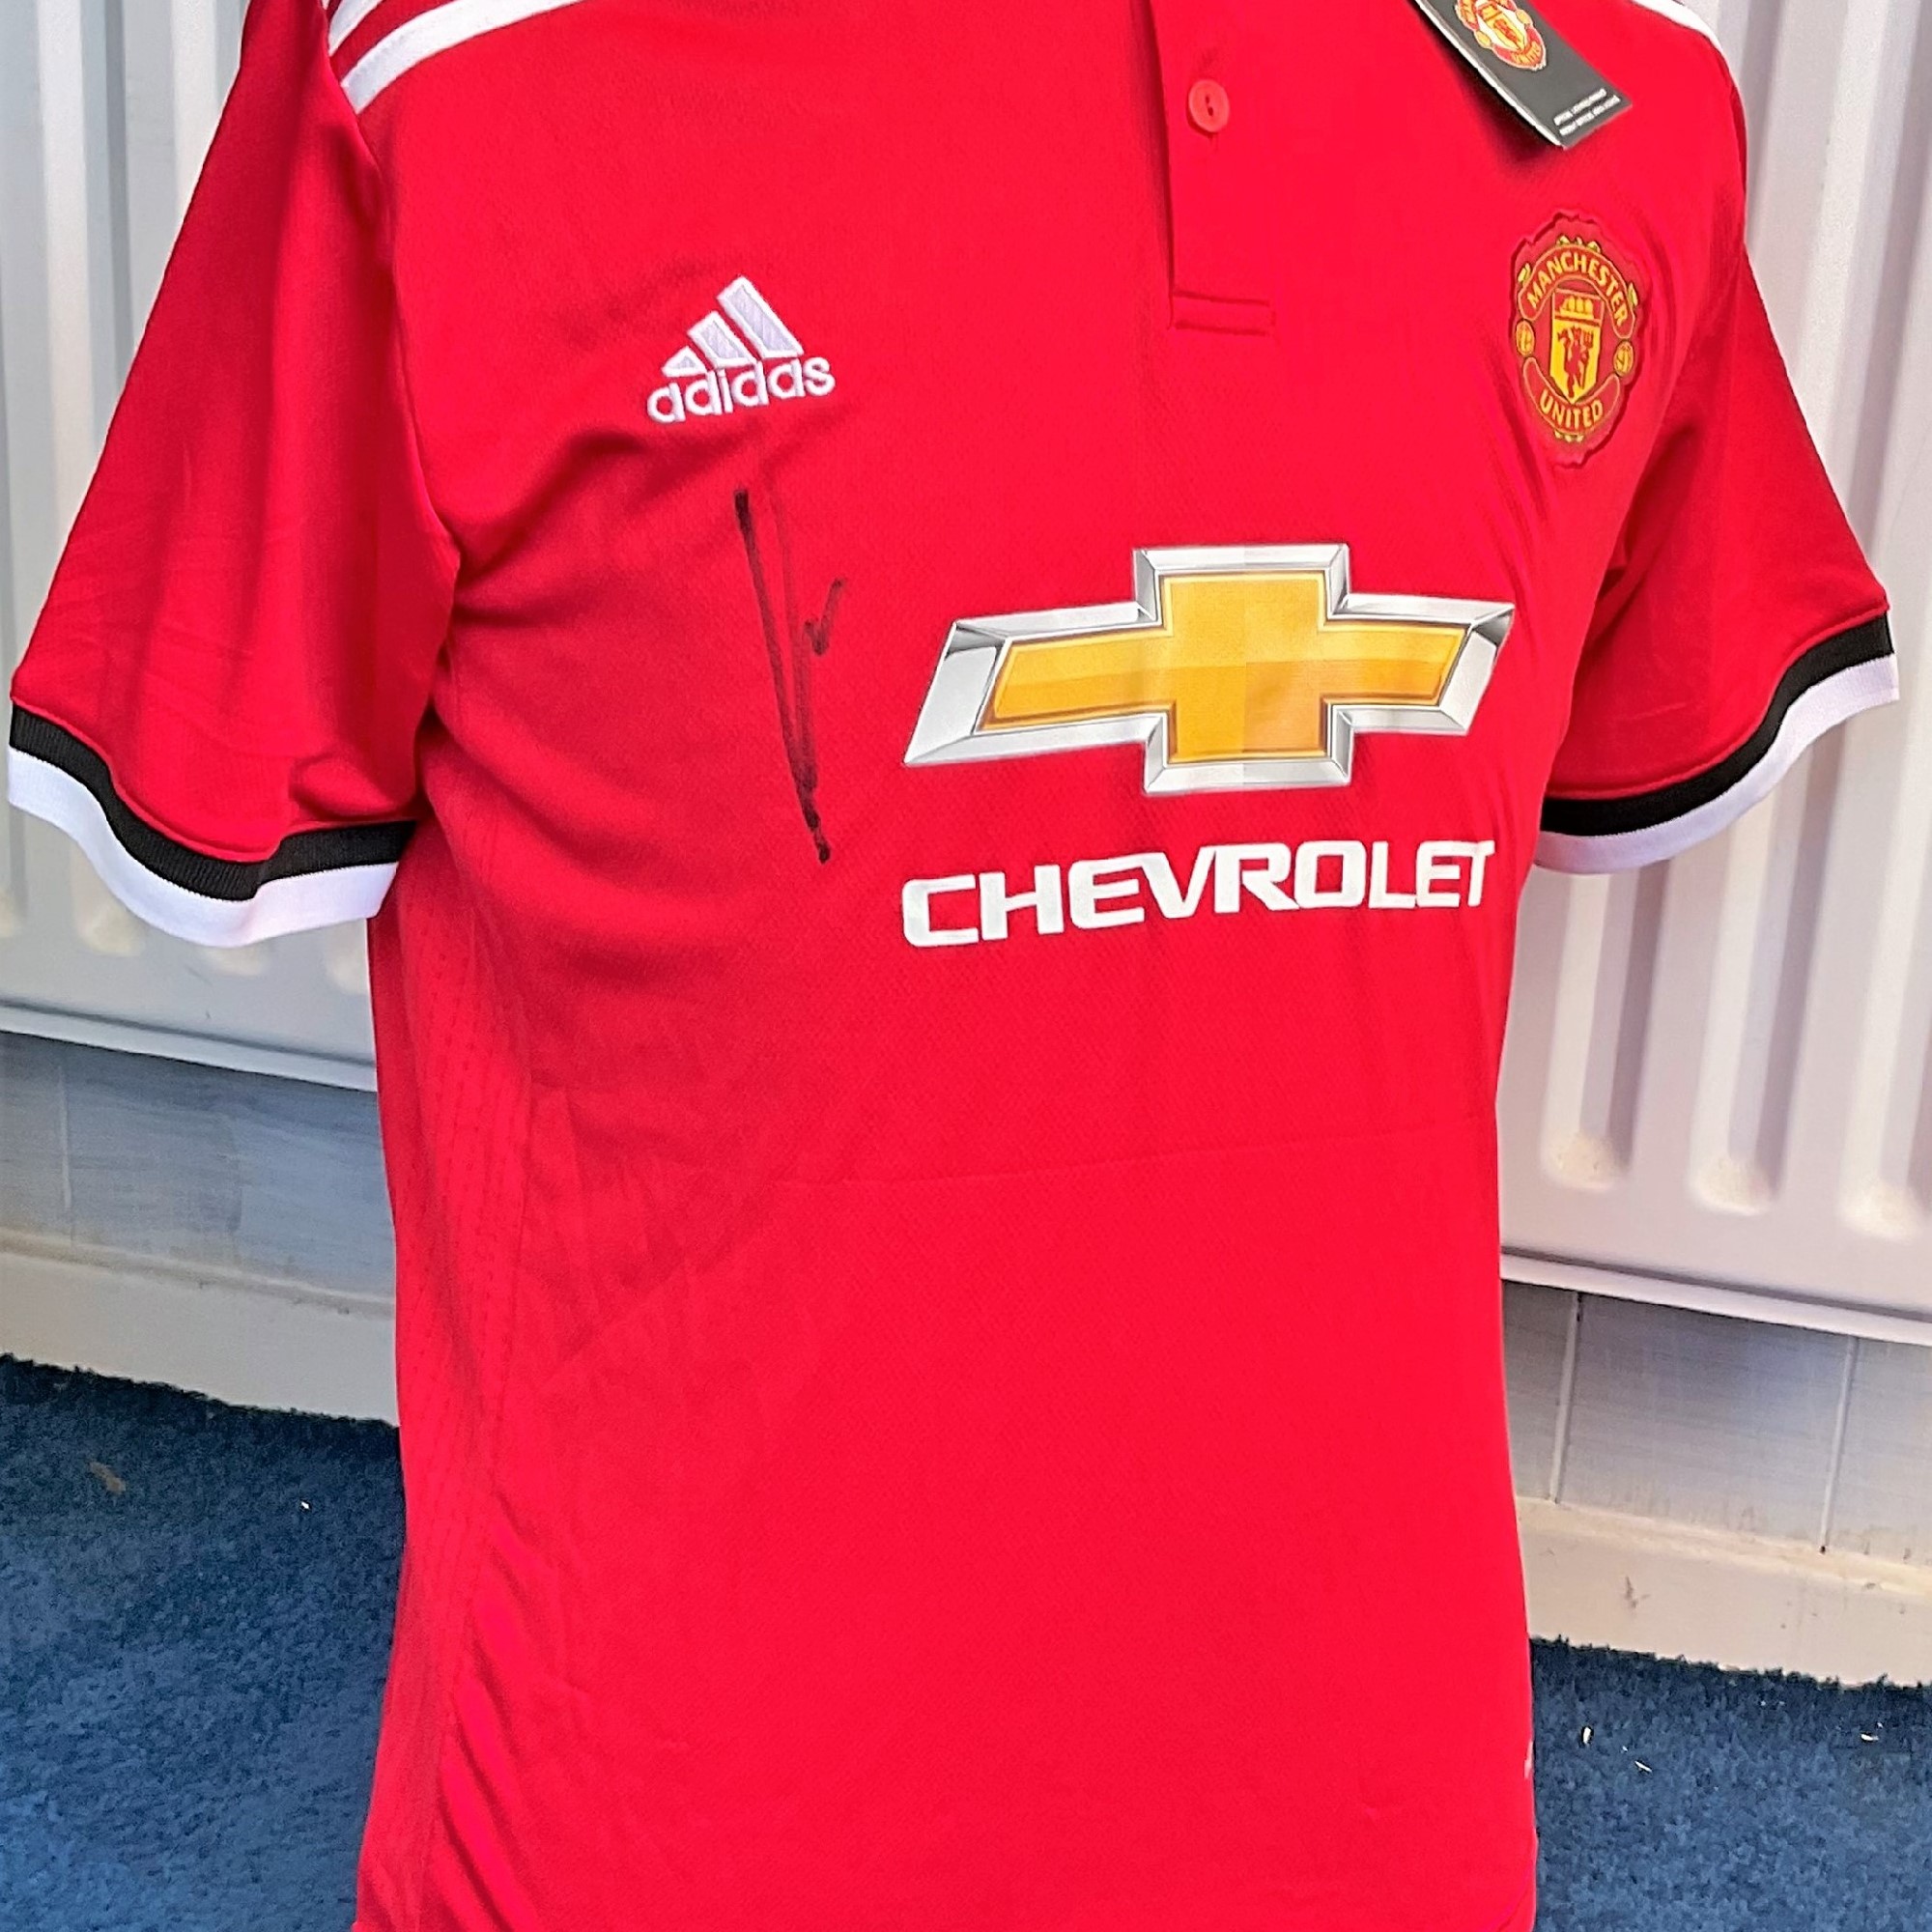 Football Romelu Lukaku signed Manchester United replica shirt. Size Small. Good condition. All